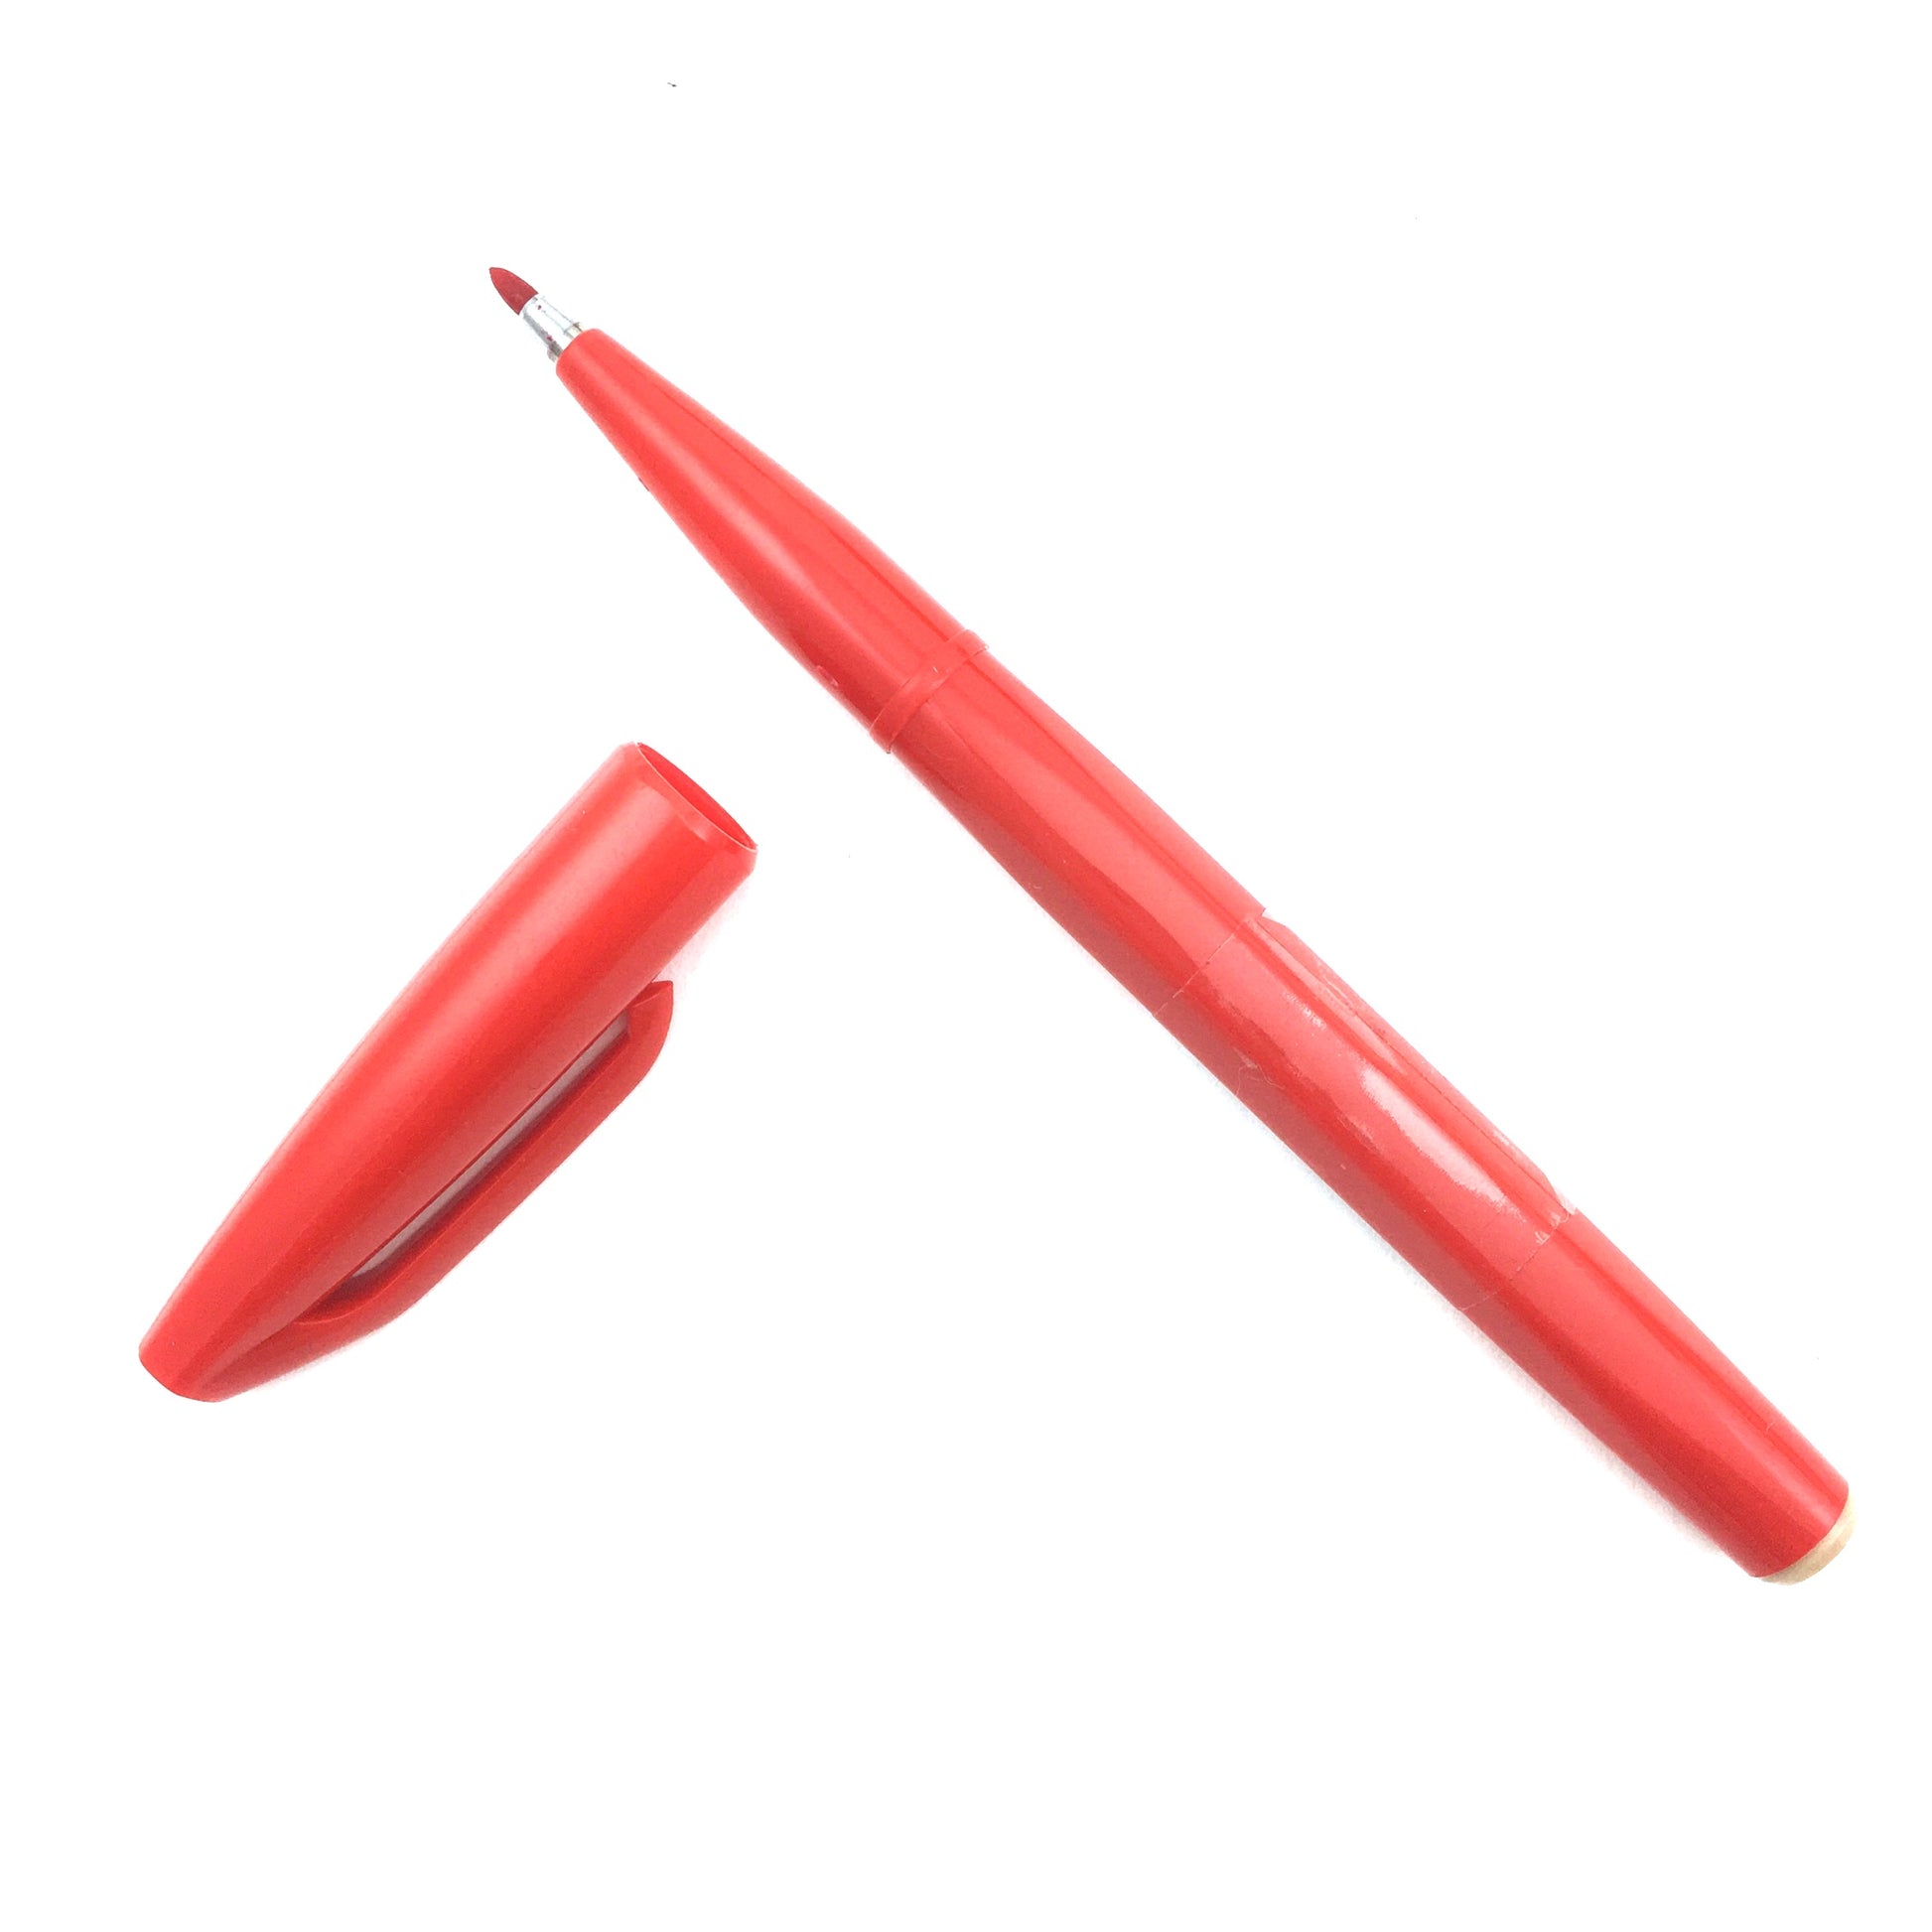 Pentel Sign Pen with Fiber Tip - Red by Pentel - K. A. Artist Shop